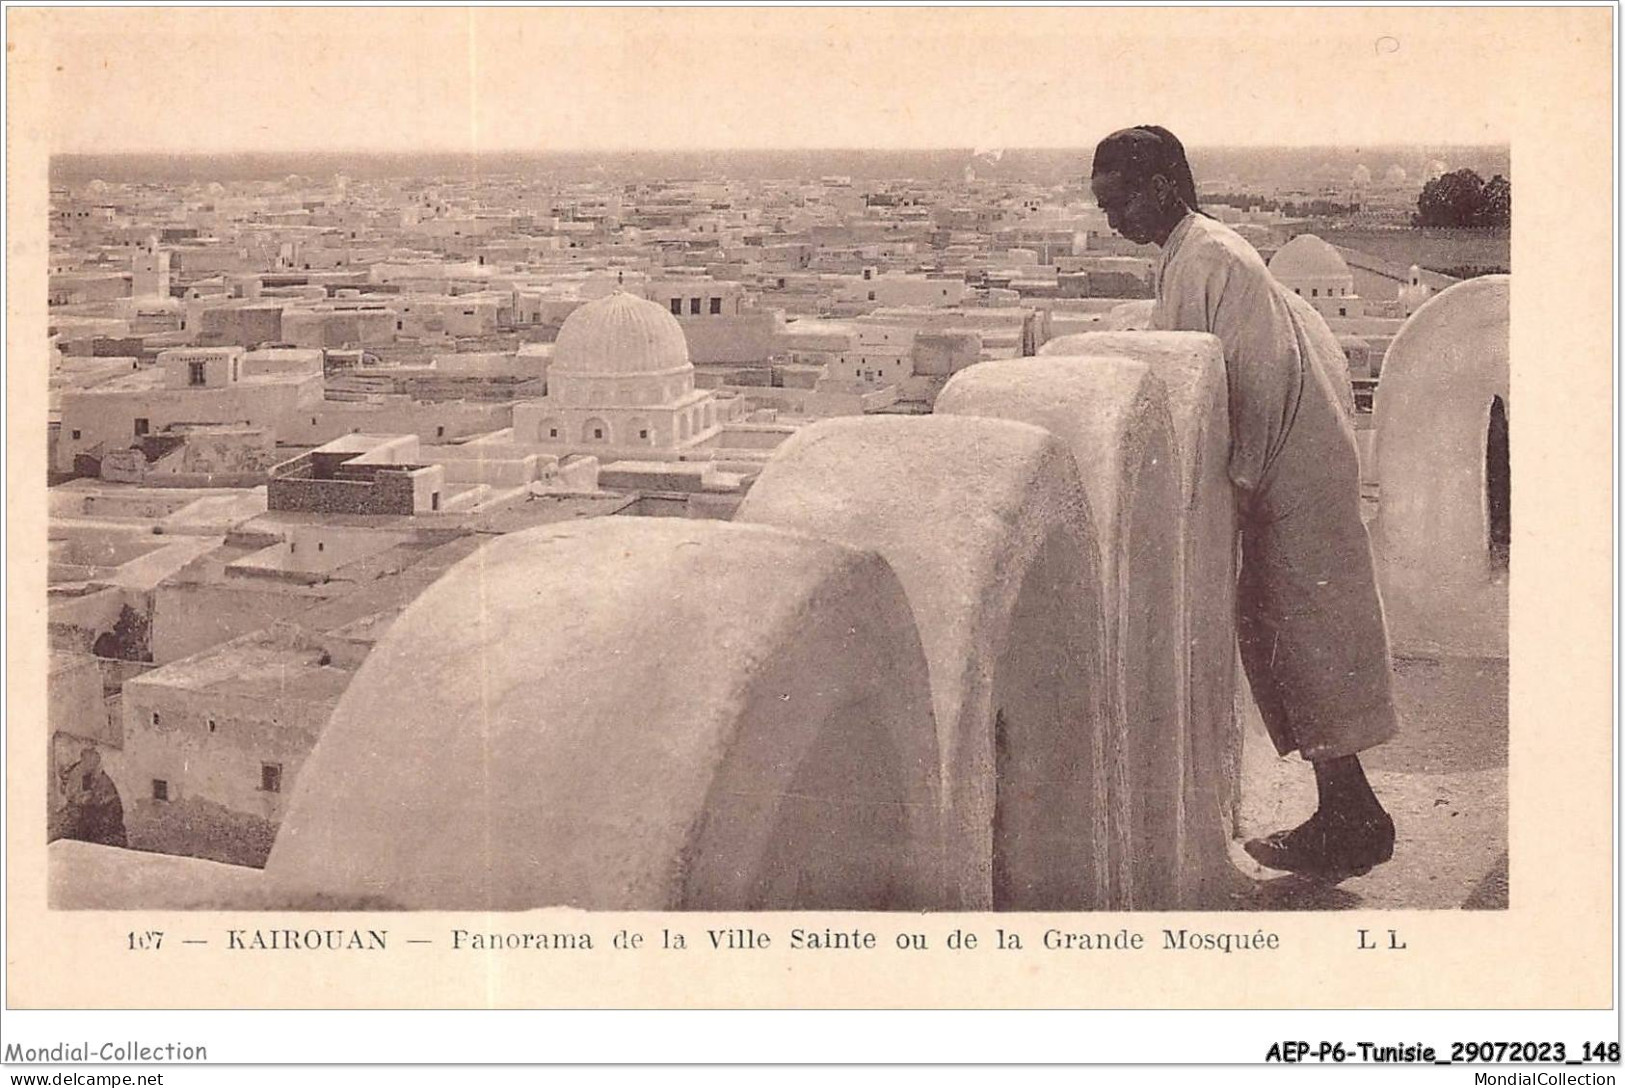 AEPP6-TUNISIE-0542 - KAIROUAN - PANORAMA DE LA VILLE SAINTE OU DE LA GRANDE MOSQUE - Tunisie